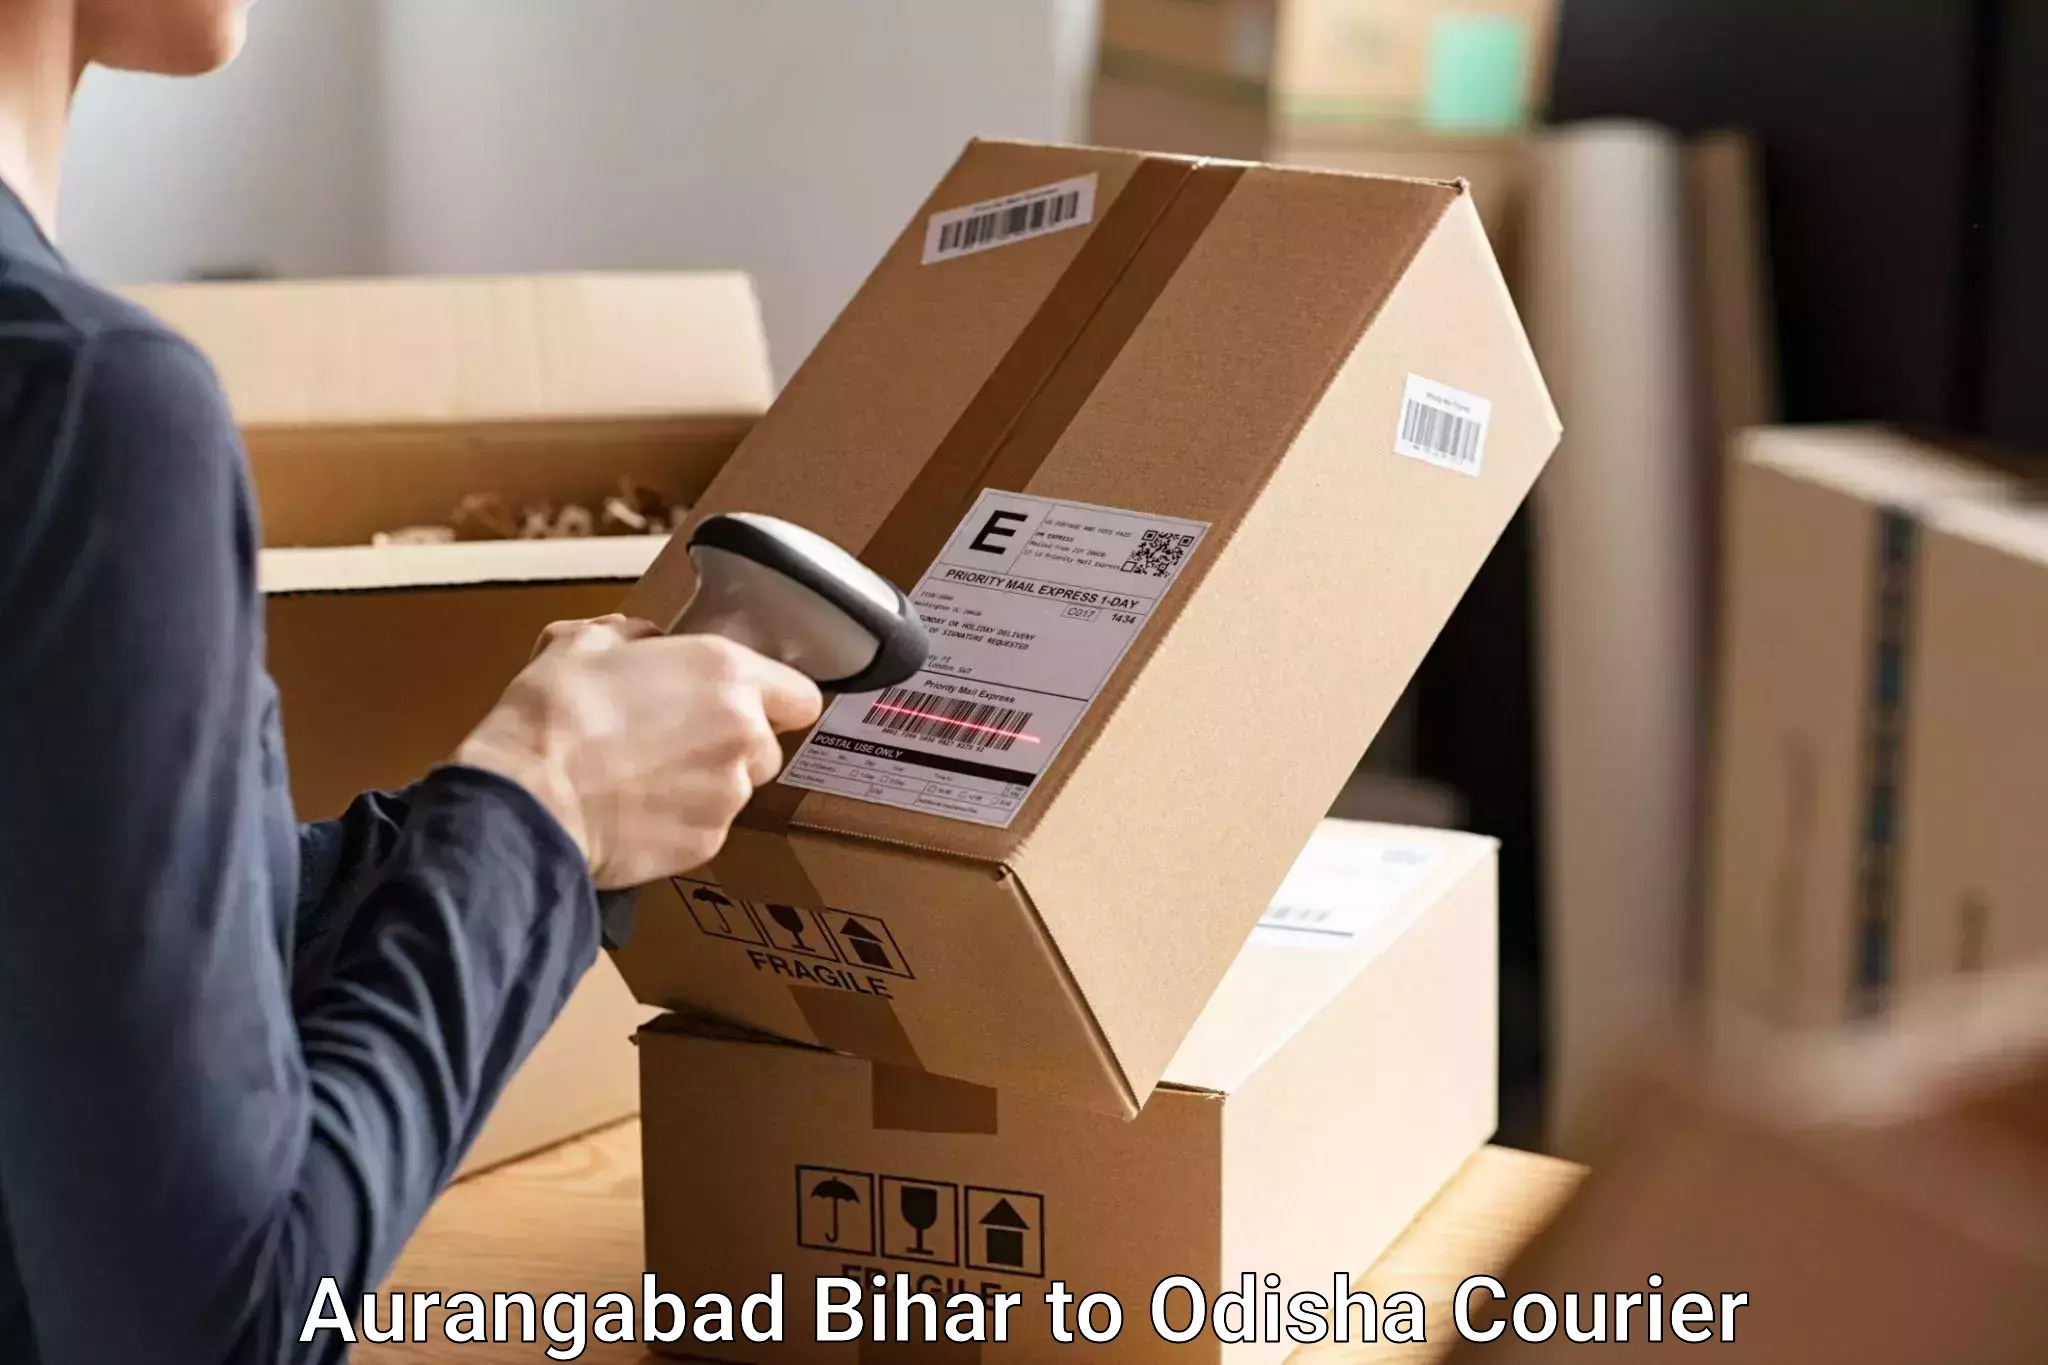 Luggage shipping service Aurangabad Bihar to Odisha